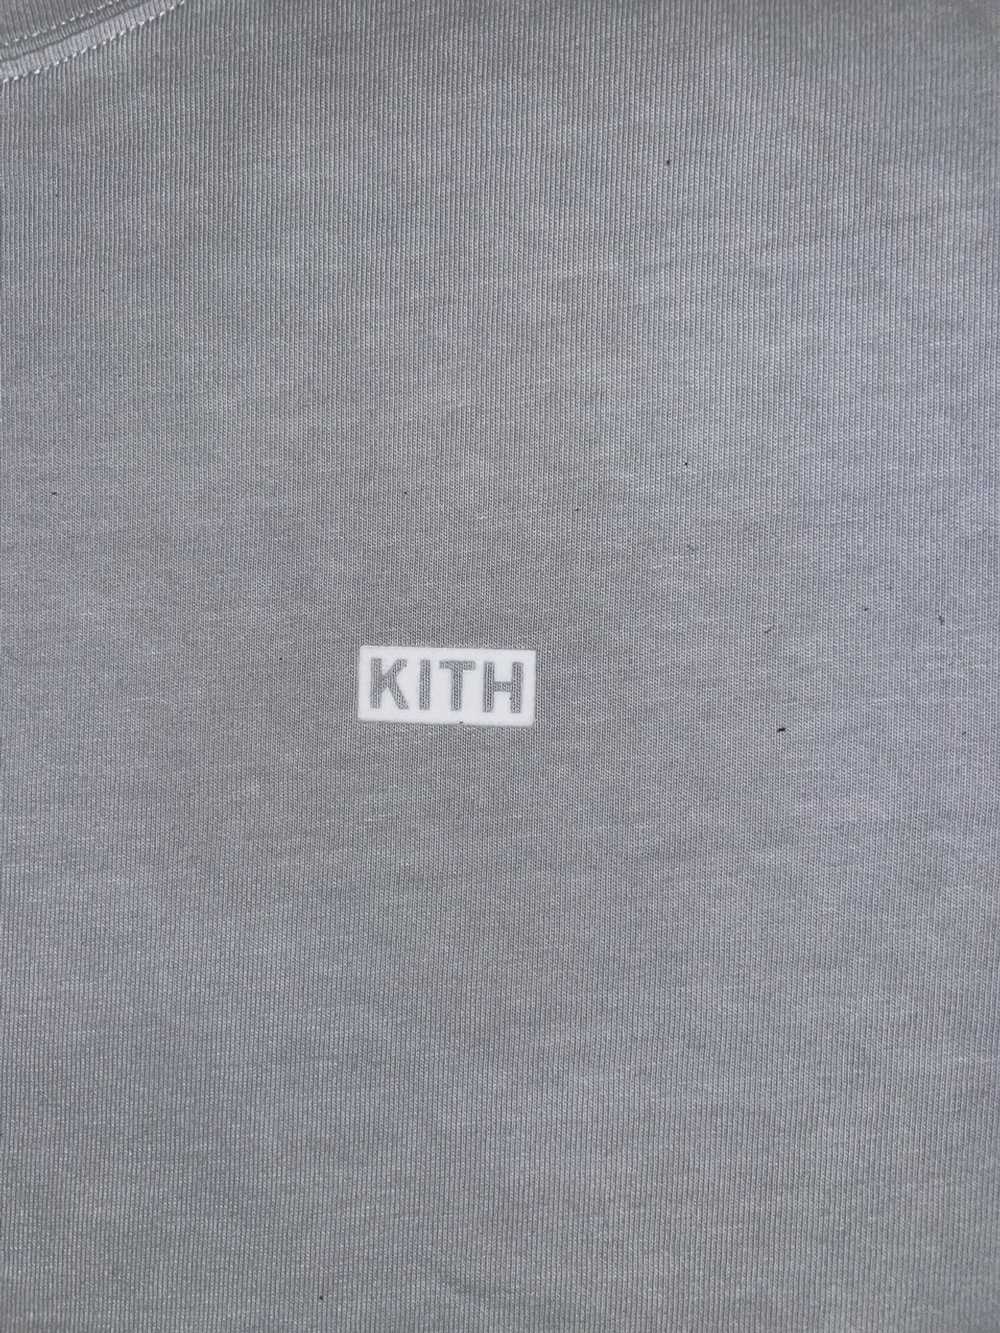 Kith Kith short sleeve t-shirt - image 2